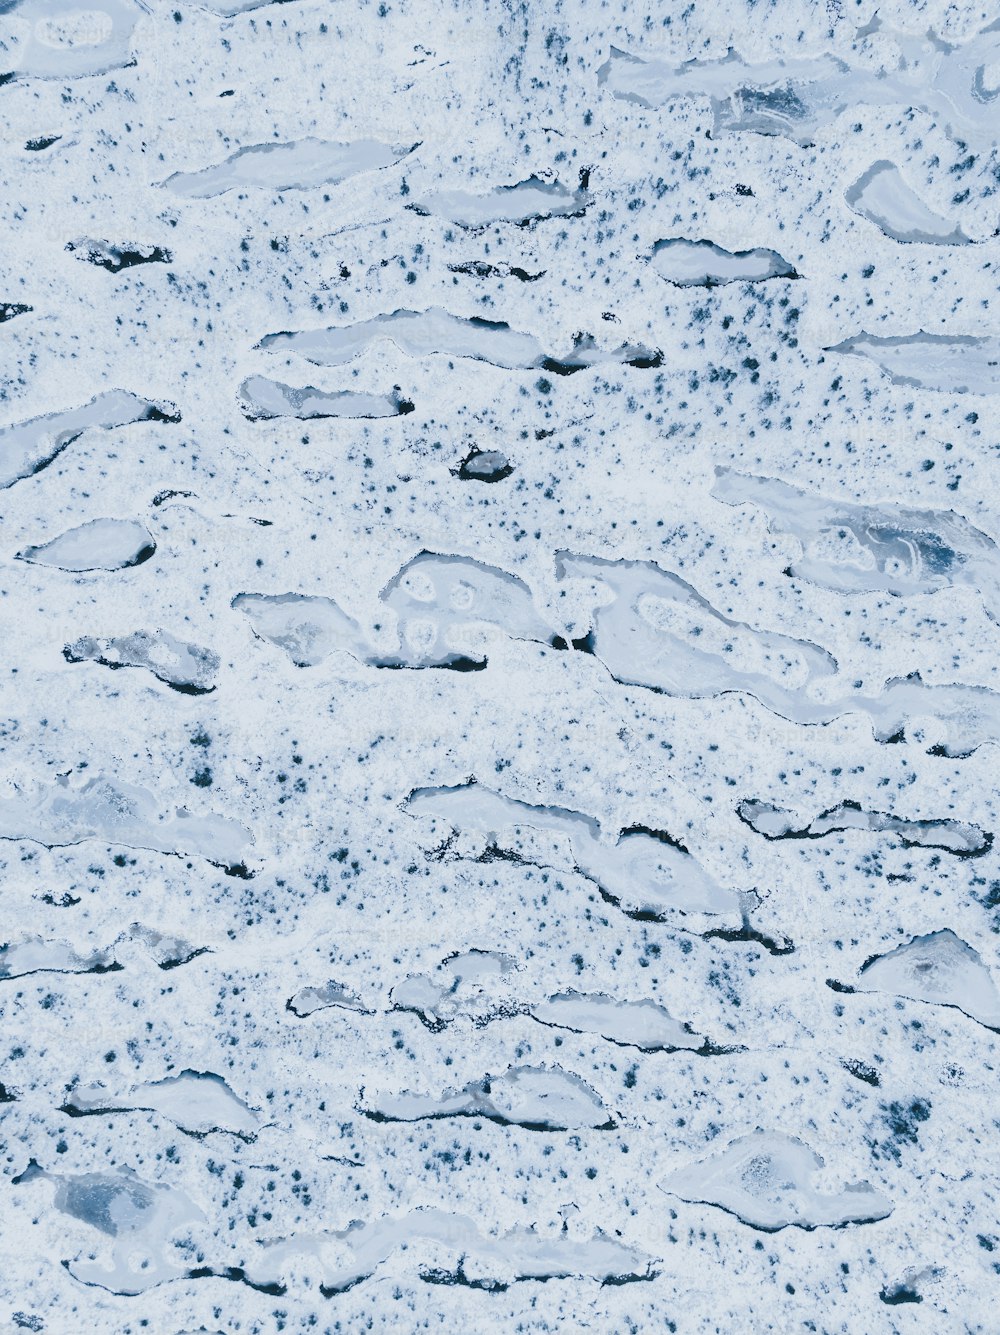 a close-up of some snow